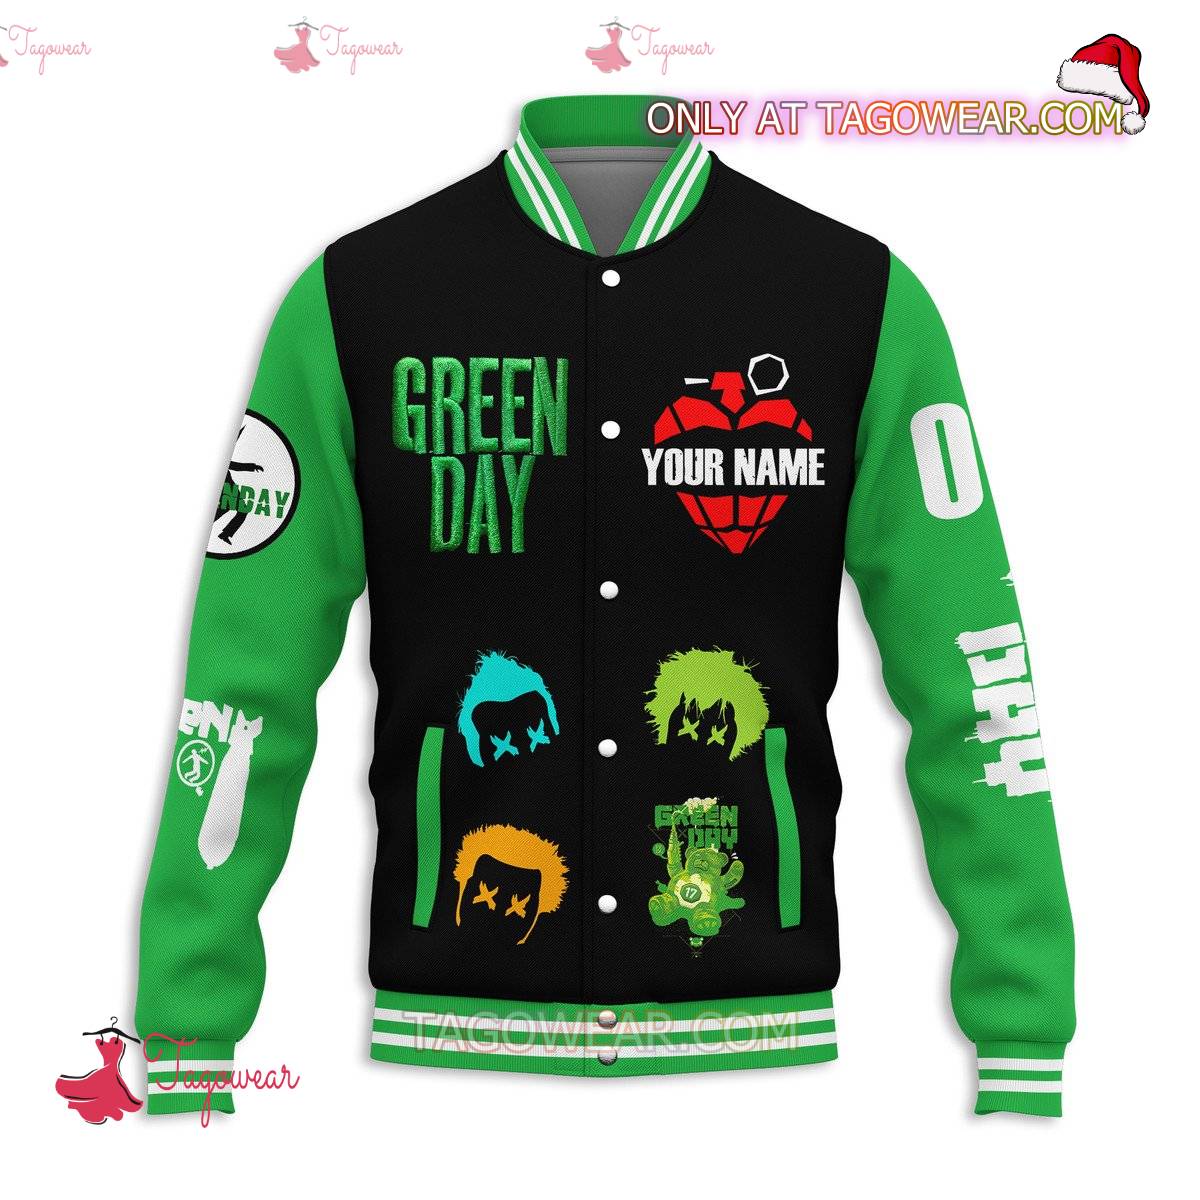 Green Day Personalized Baseball Jacket a